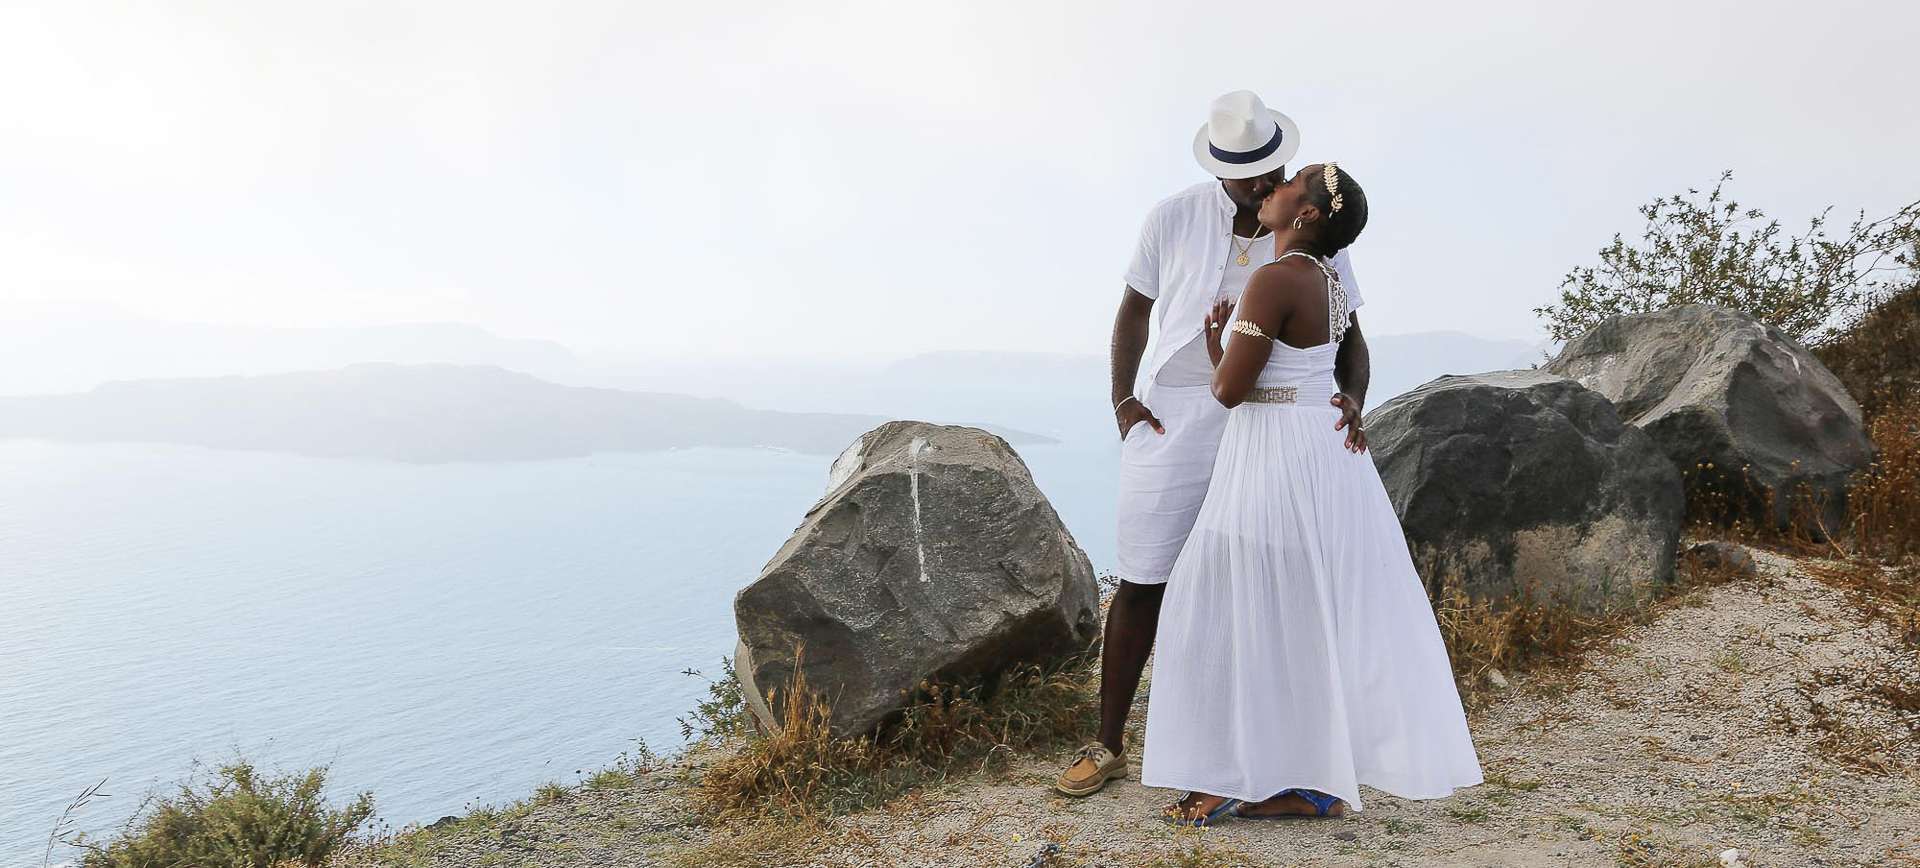 santorini honeymoon photography greece 2